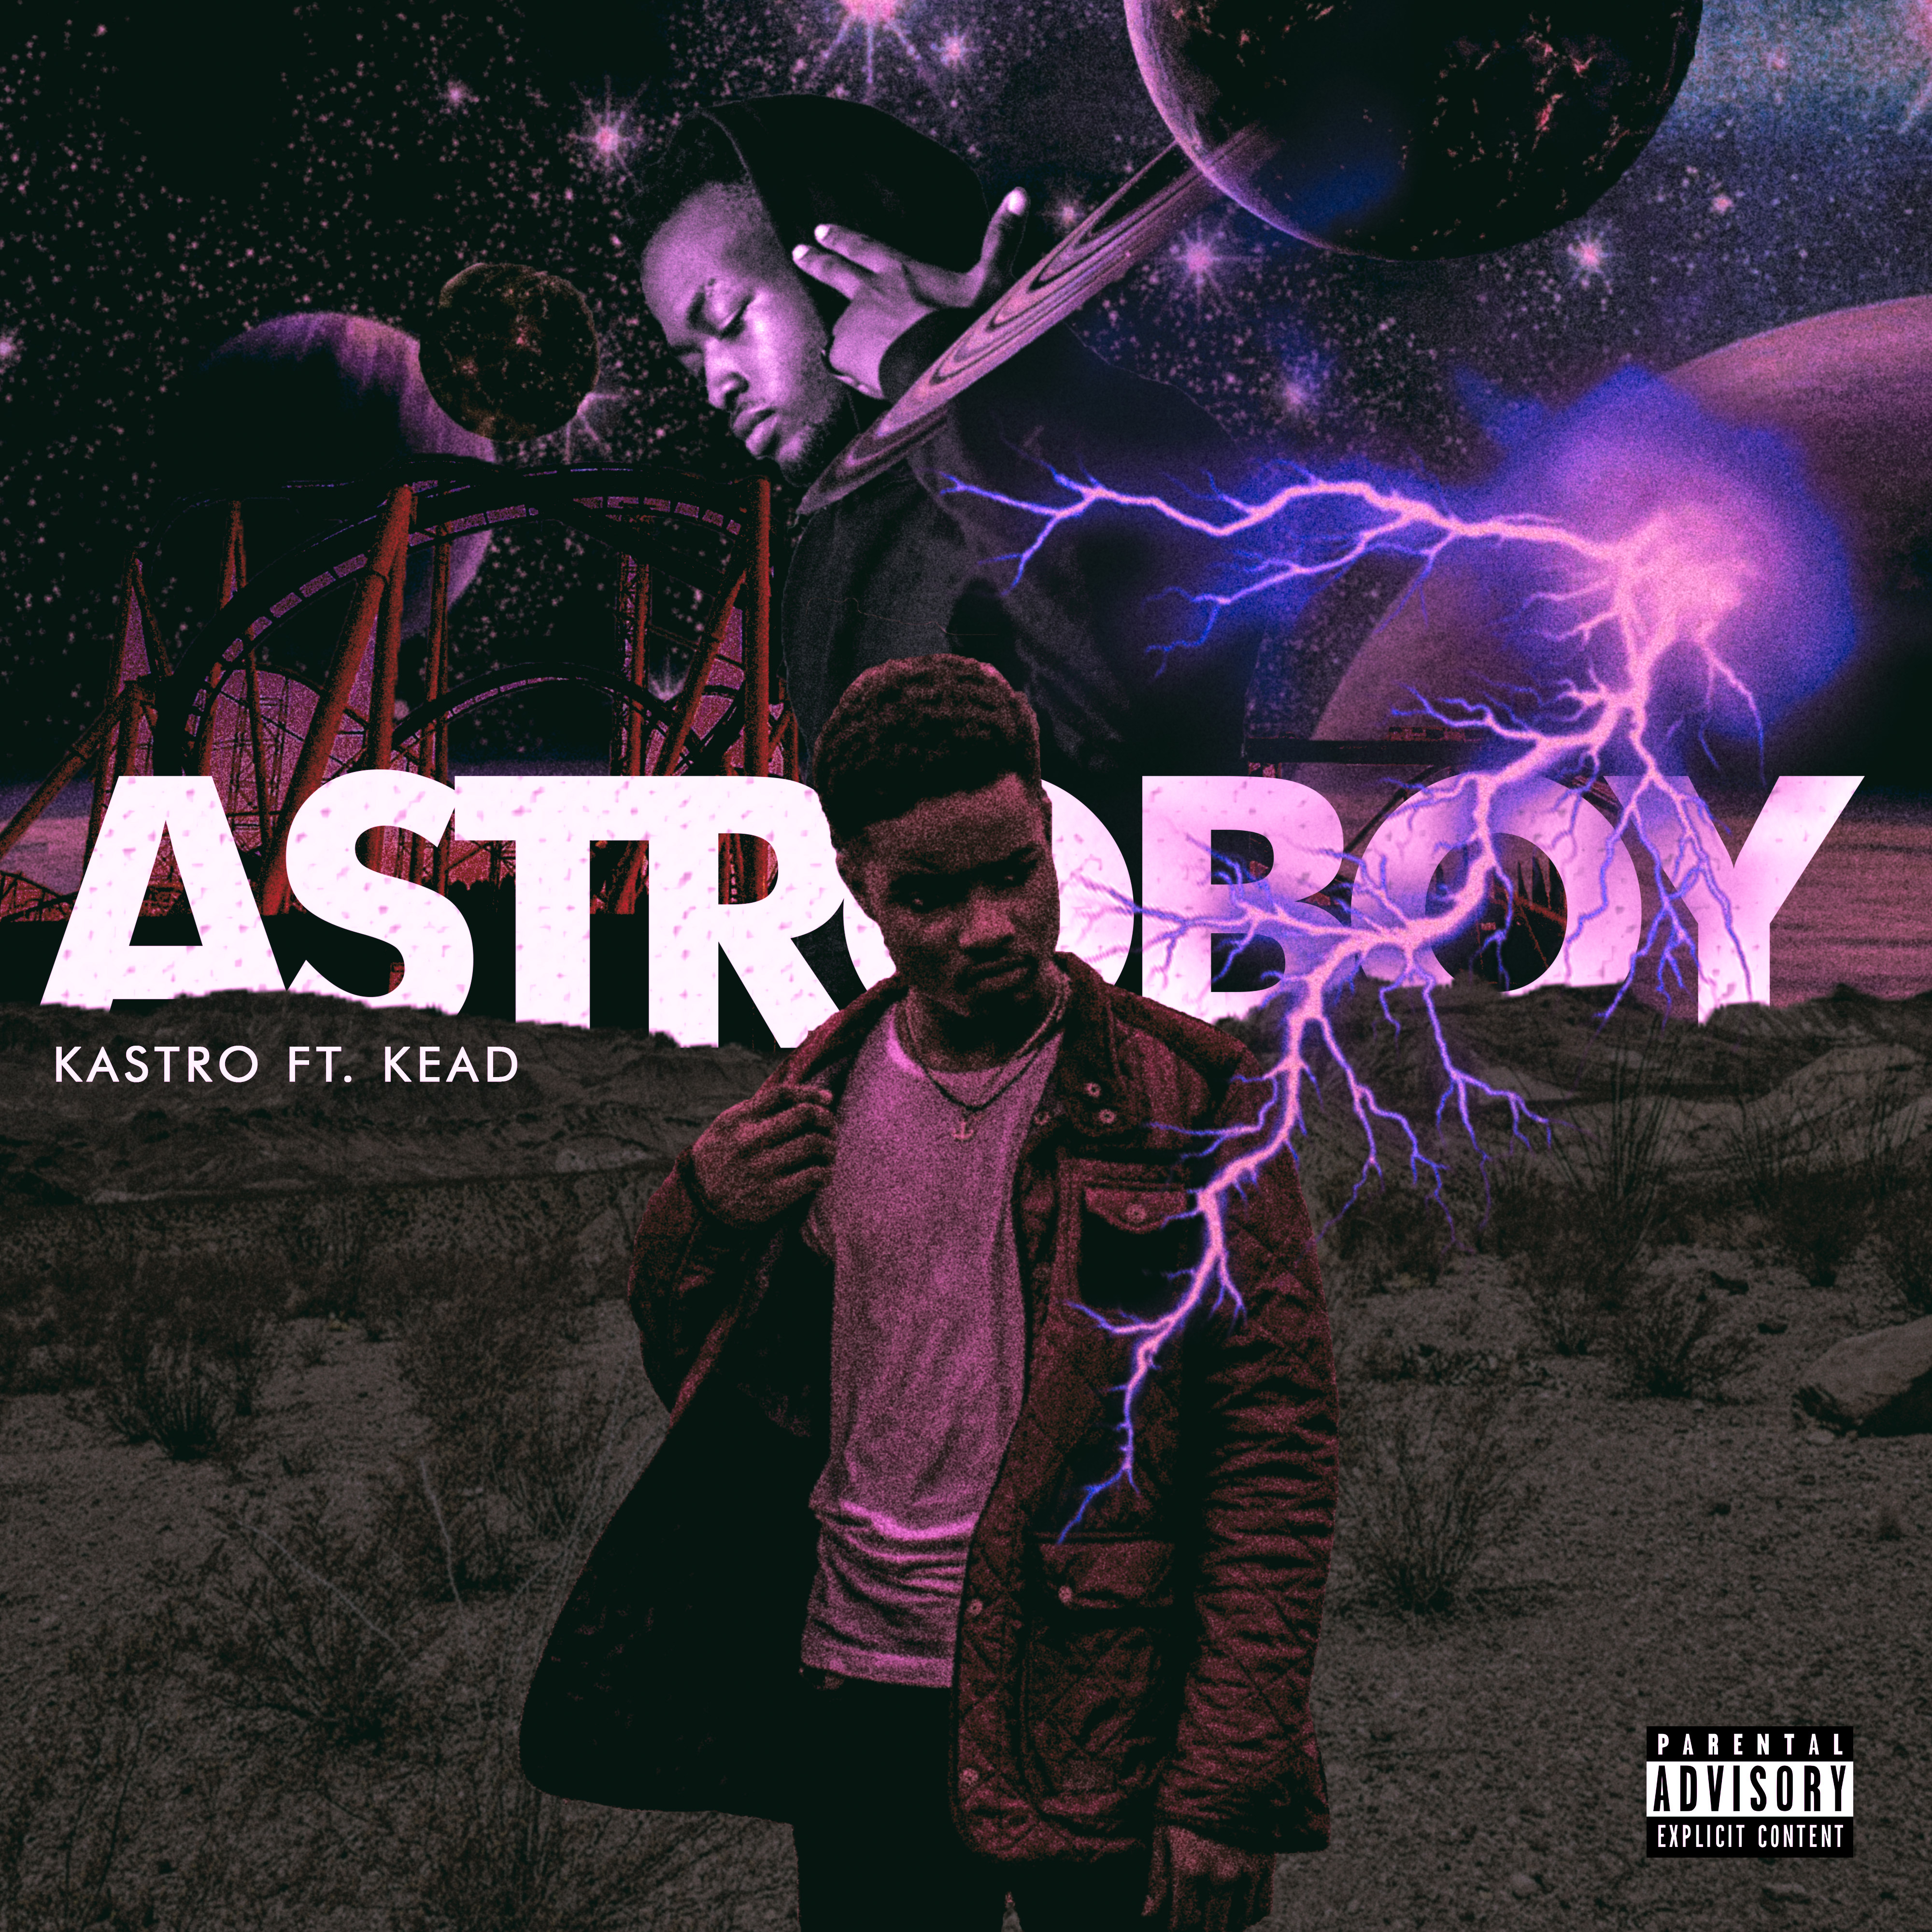 Astroboy